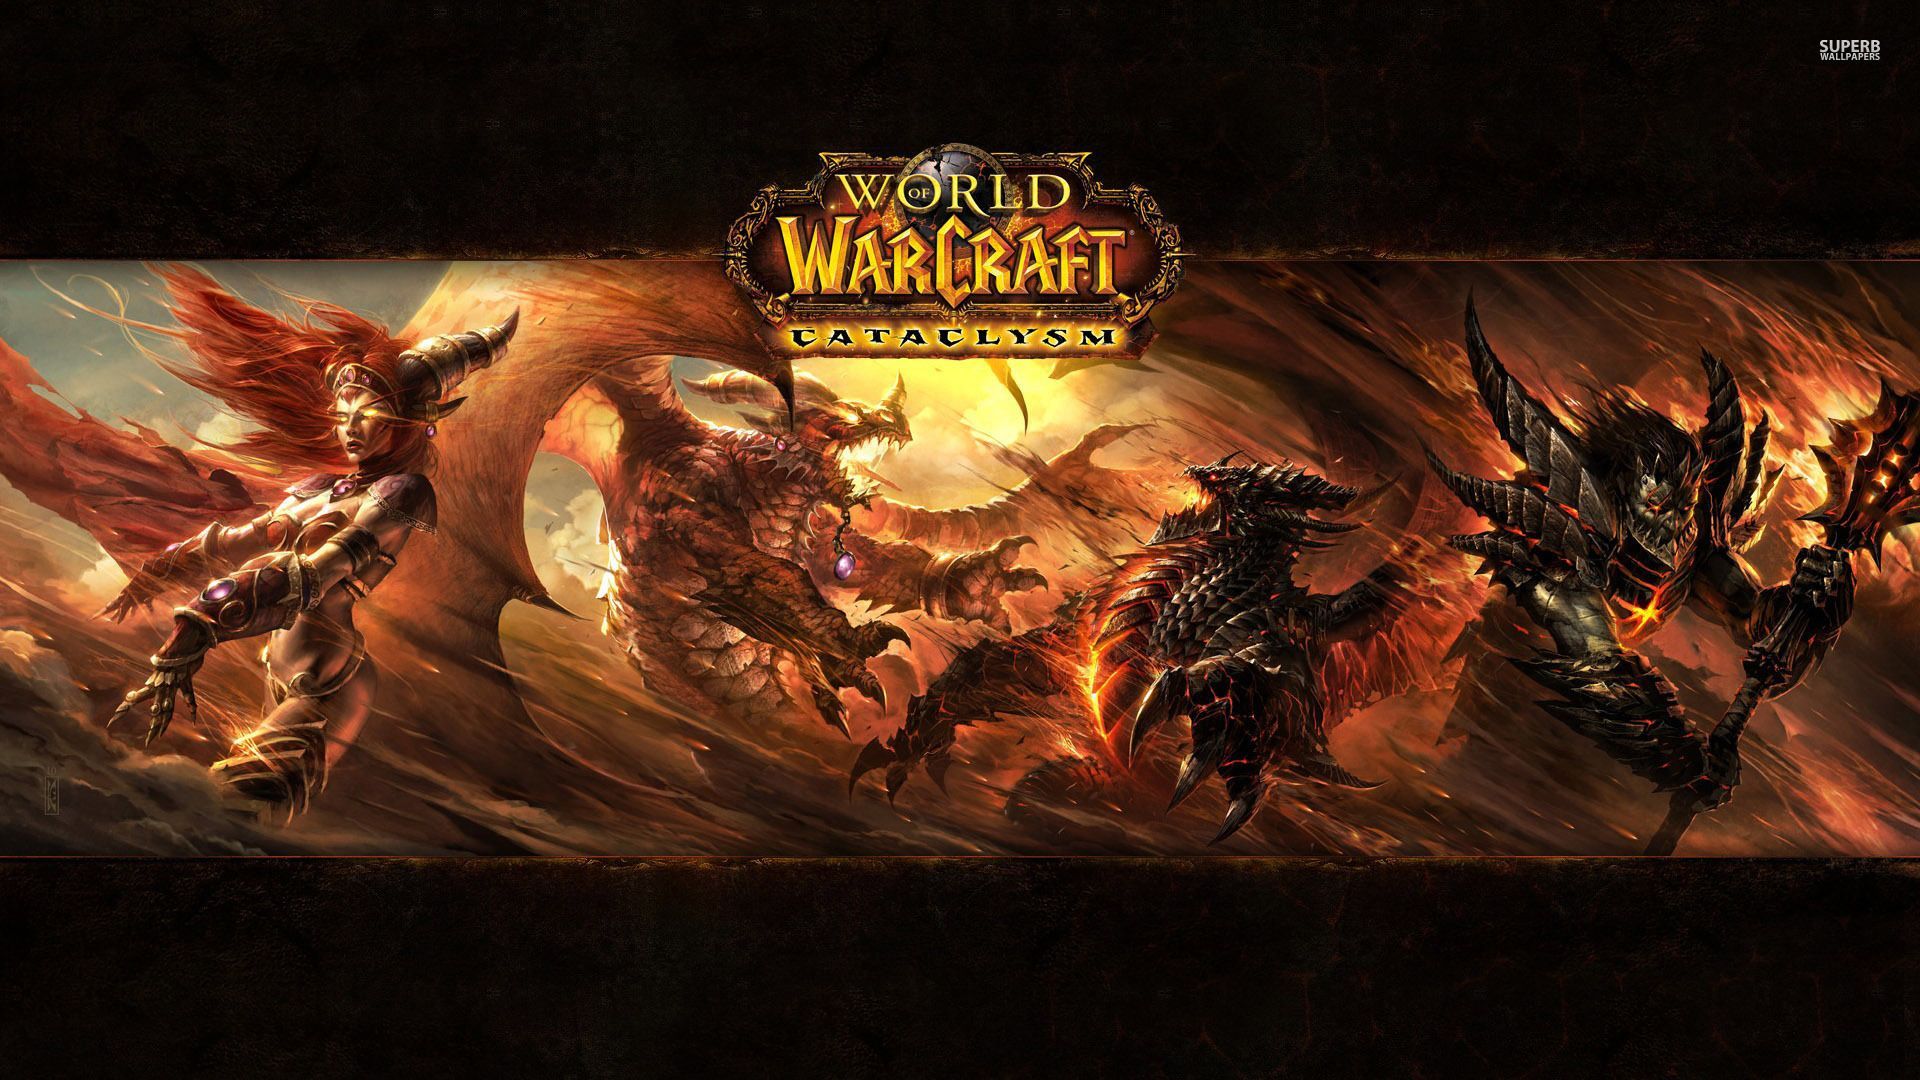 World of Warcraft - Cataclysm wallpaper - Game wallpapers - #29870